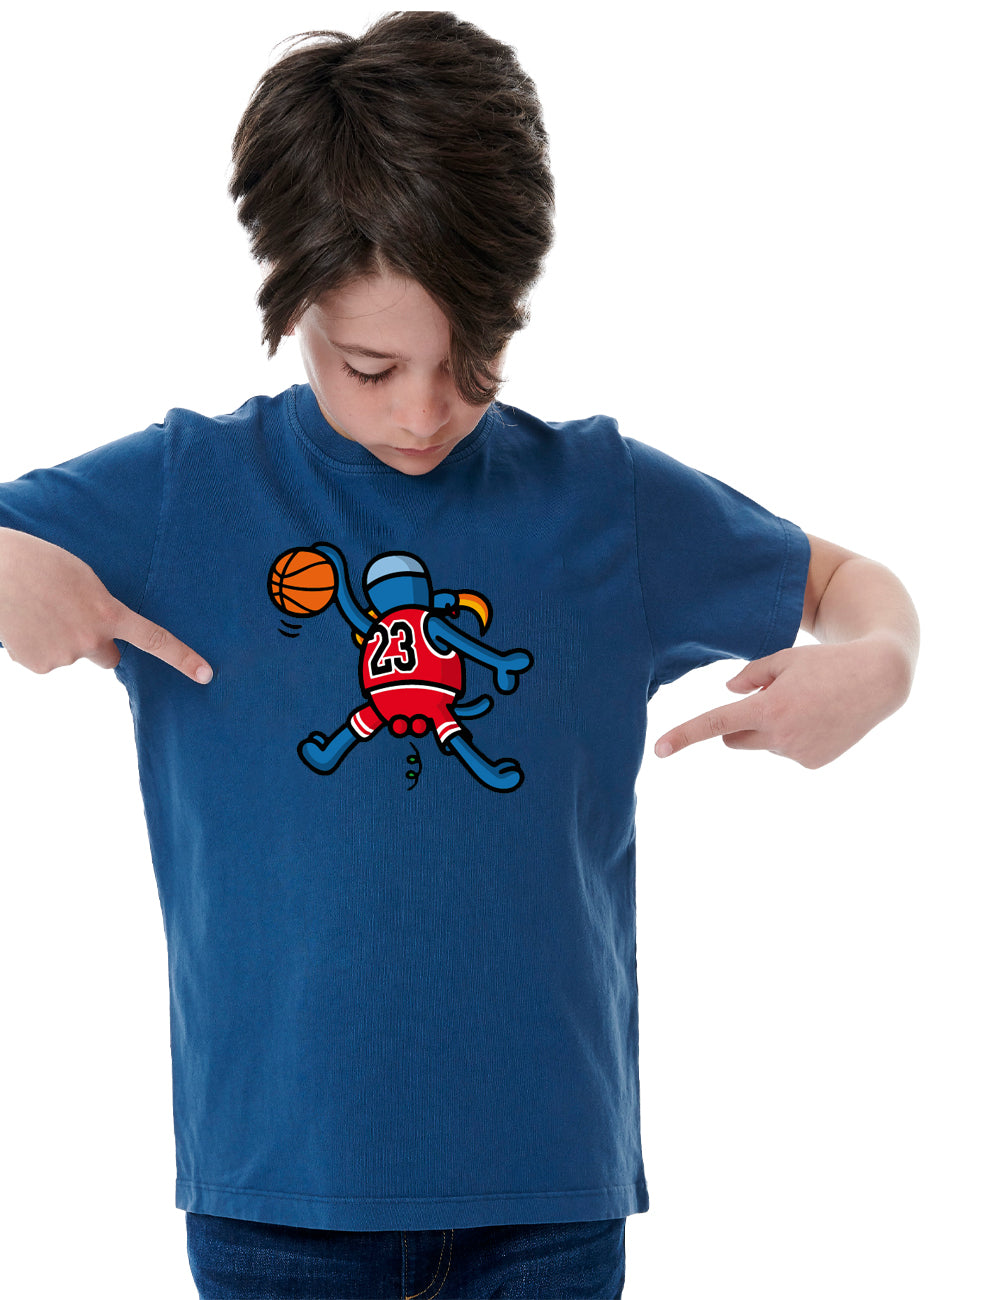 Txikago Bull Kids T-Shirt